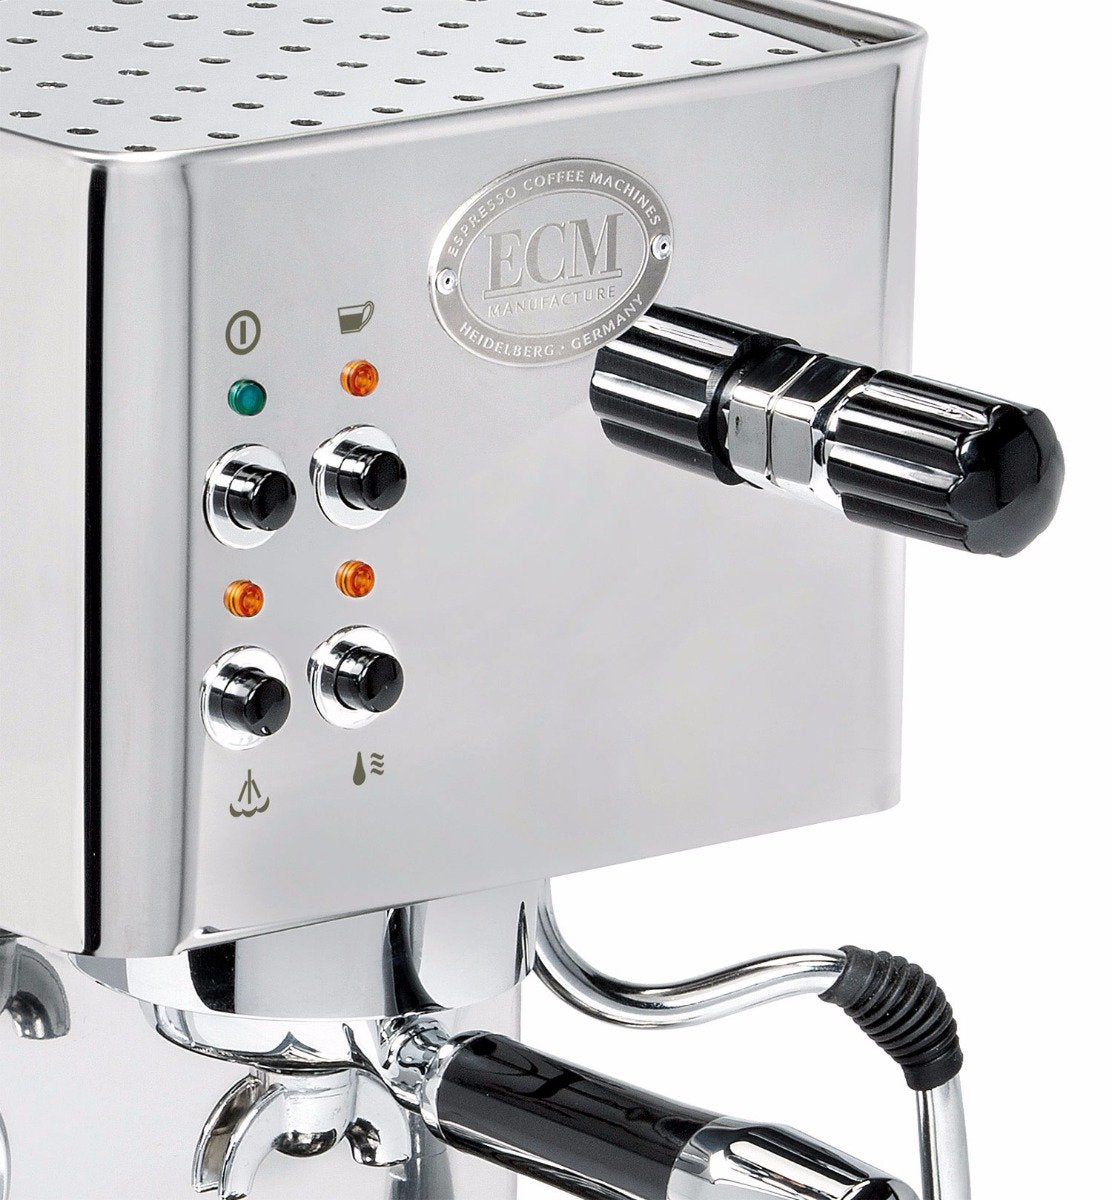 Incasa 12 Volt Portable Coffee Machine